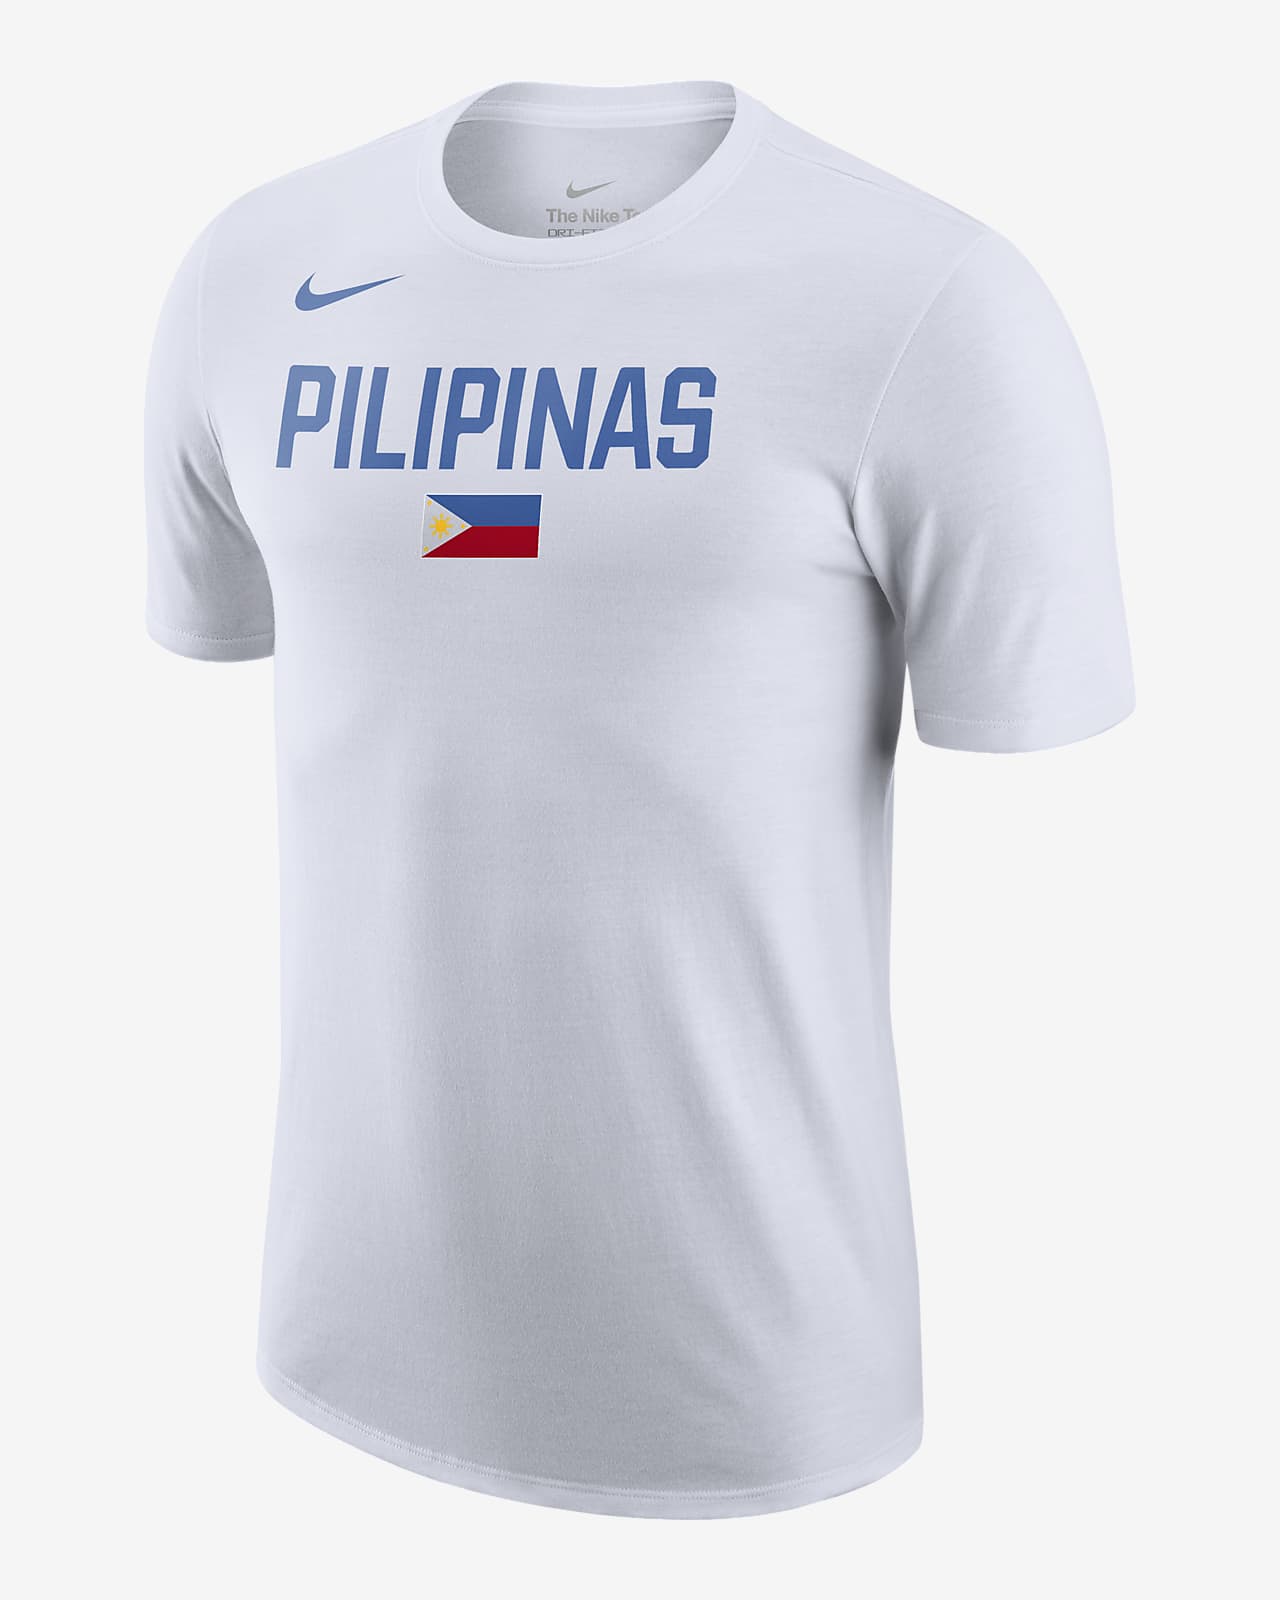 Sale Tops & T-Shirts. Nike PH